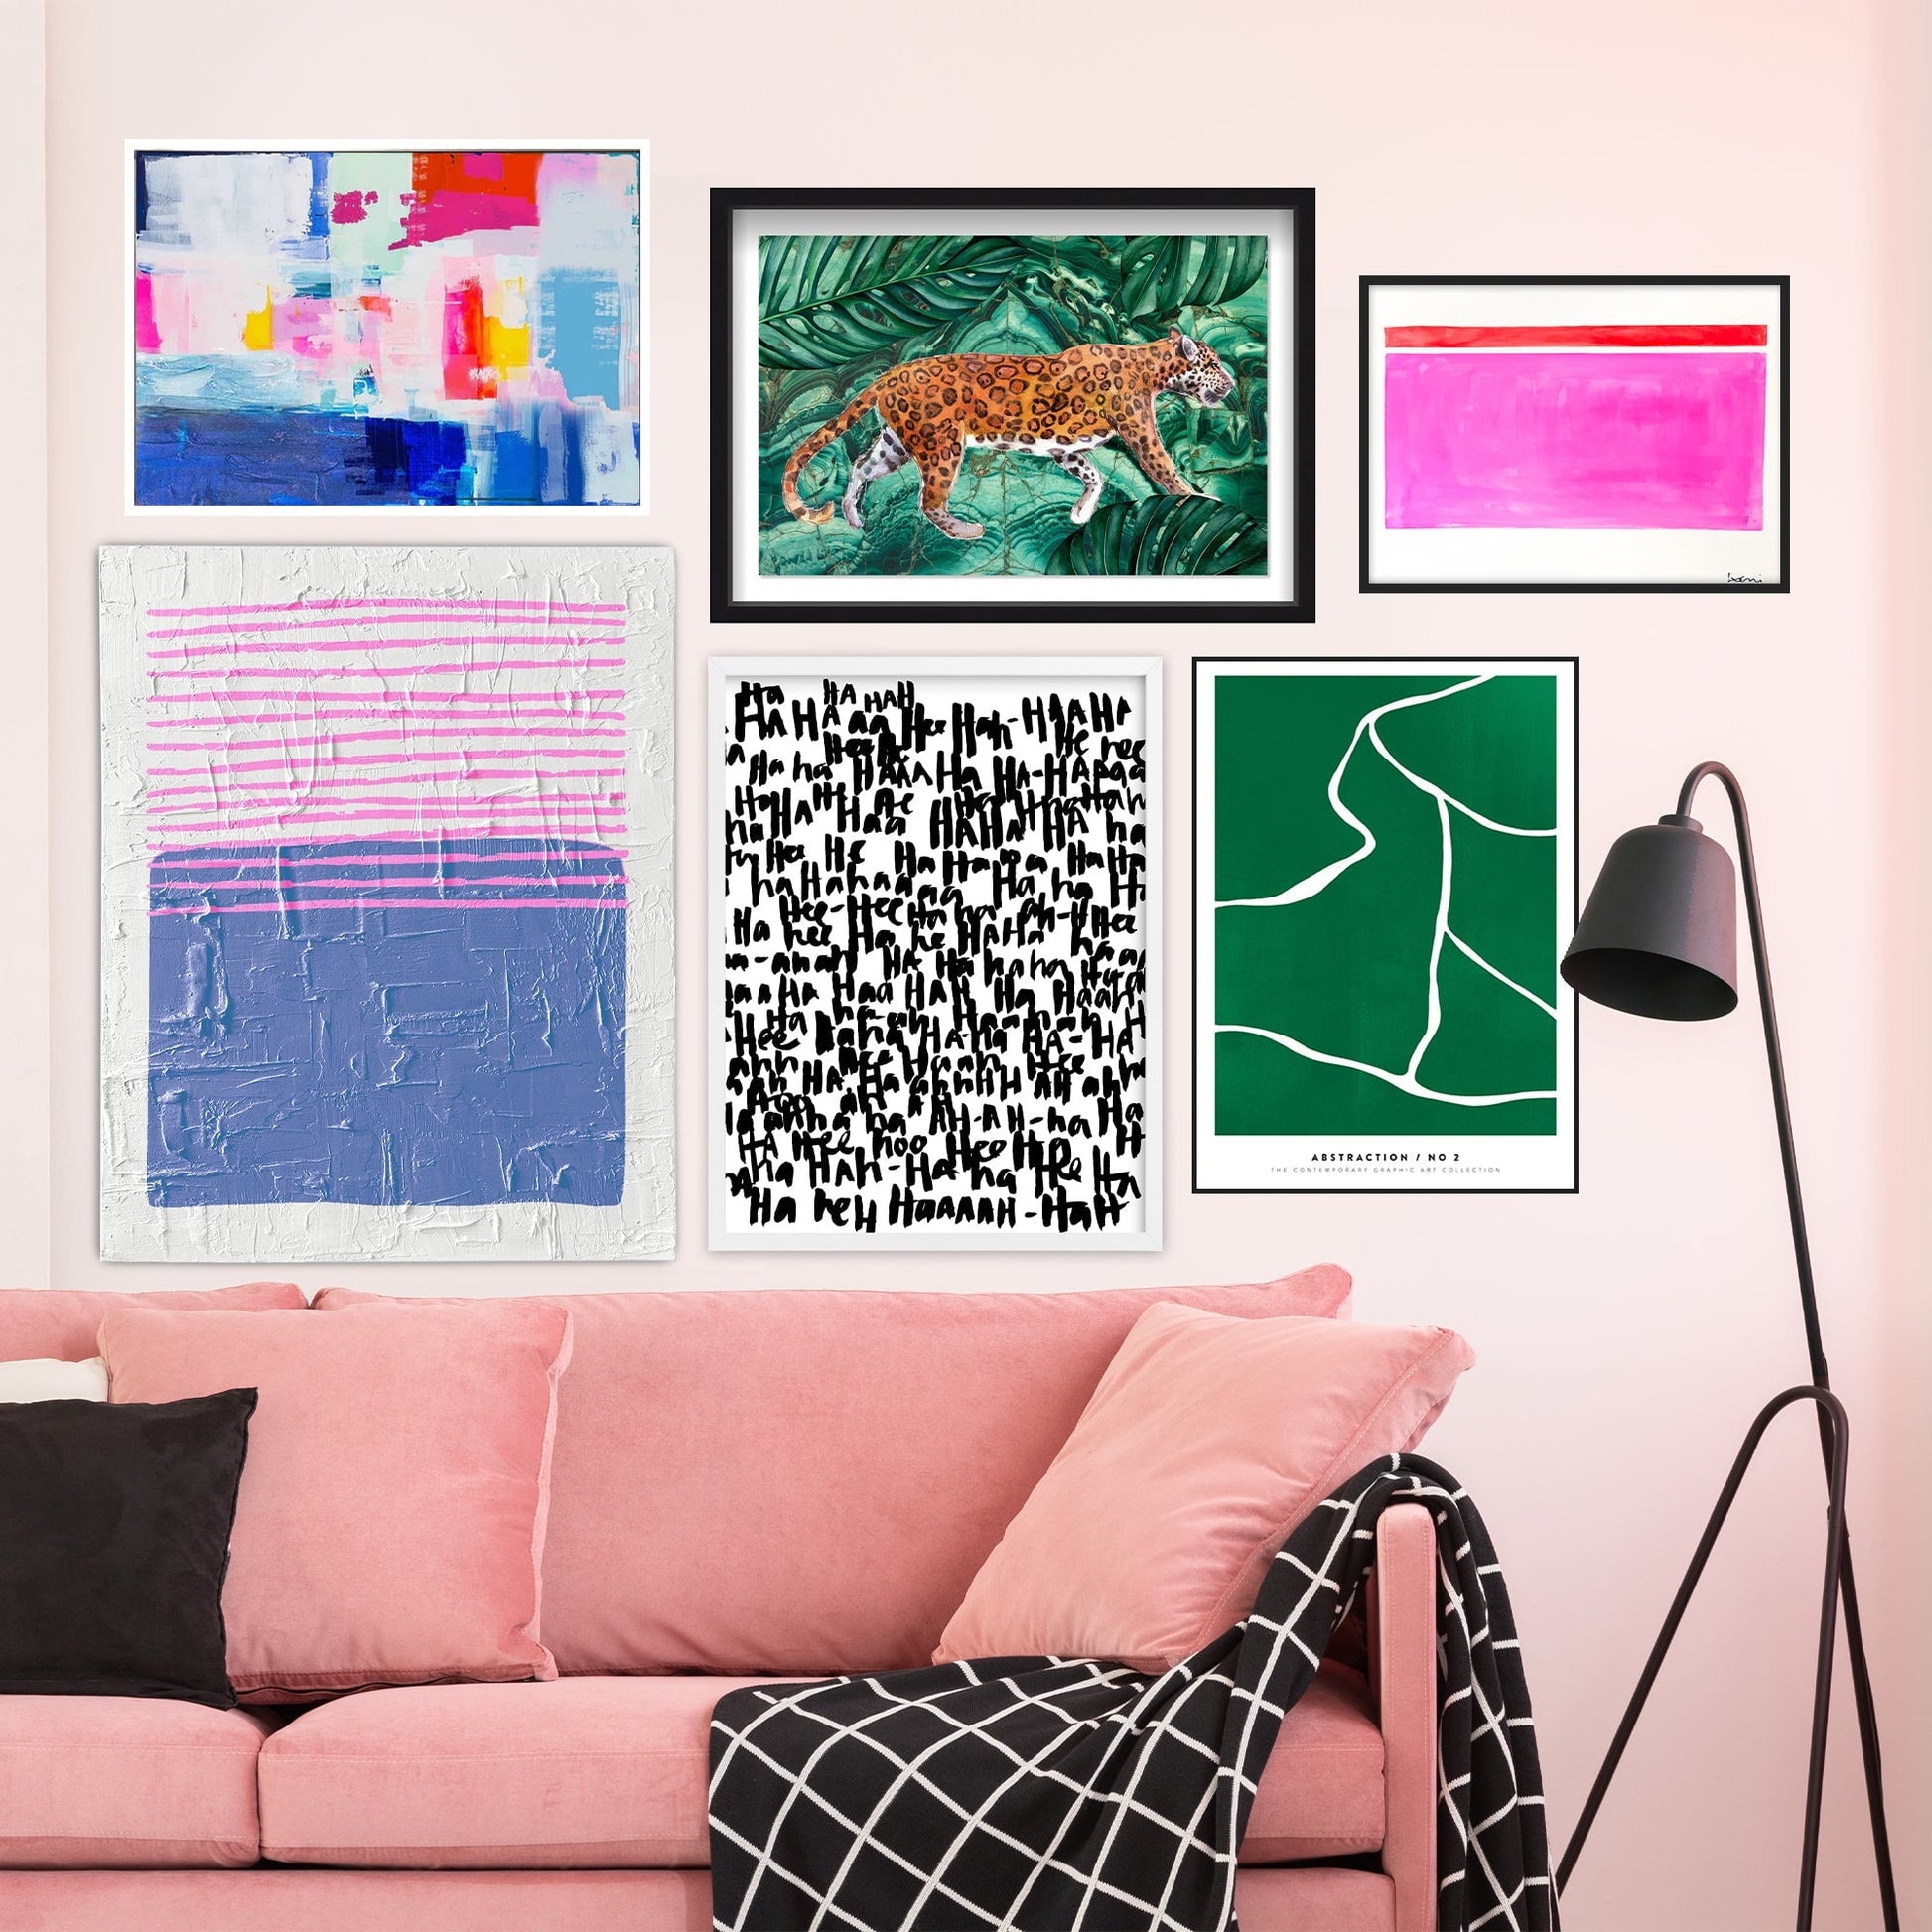 Abstract Pink + Blue Lines Textured Art TEXTURED ART LULUSIMONSTUDIO 